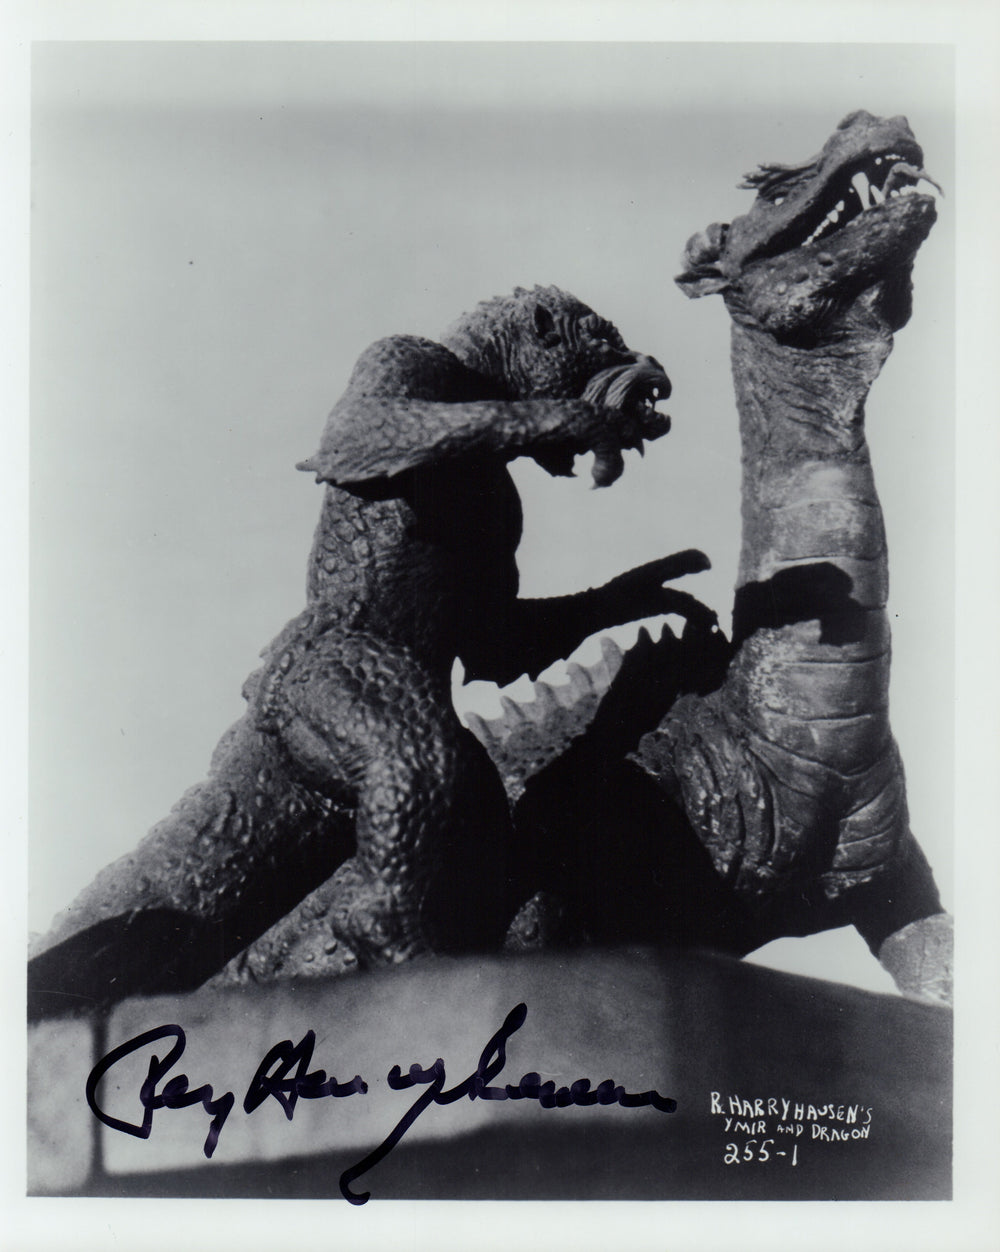 Ray Harryhausen Legendary Stop Motion Animator '20 Million Miles to Earth' Signed 8x10 Photo